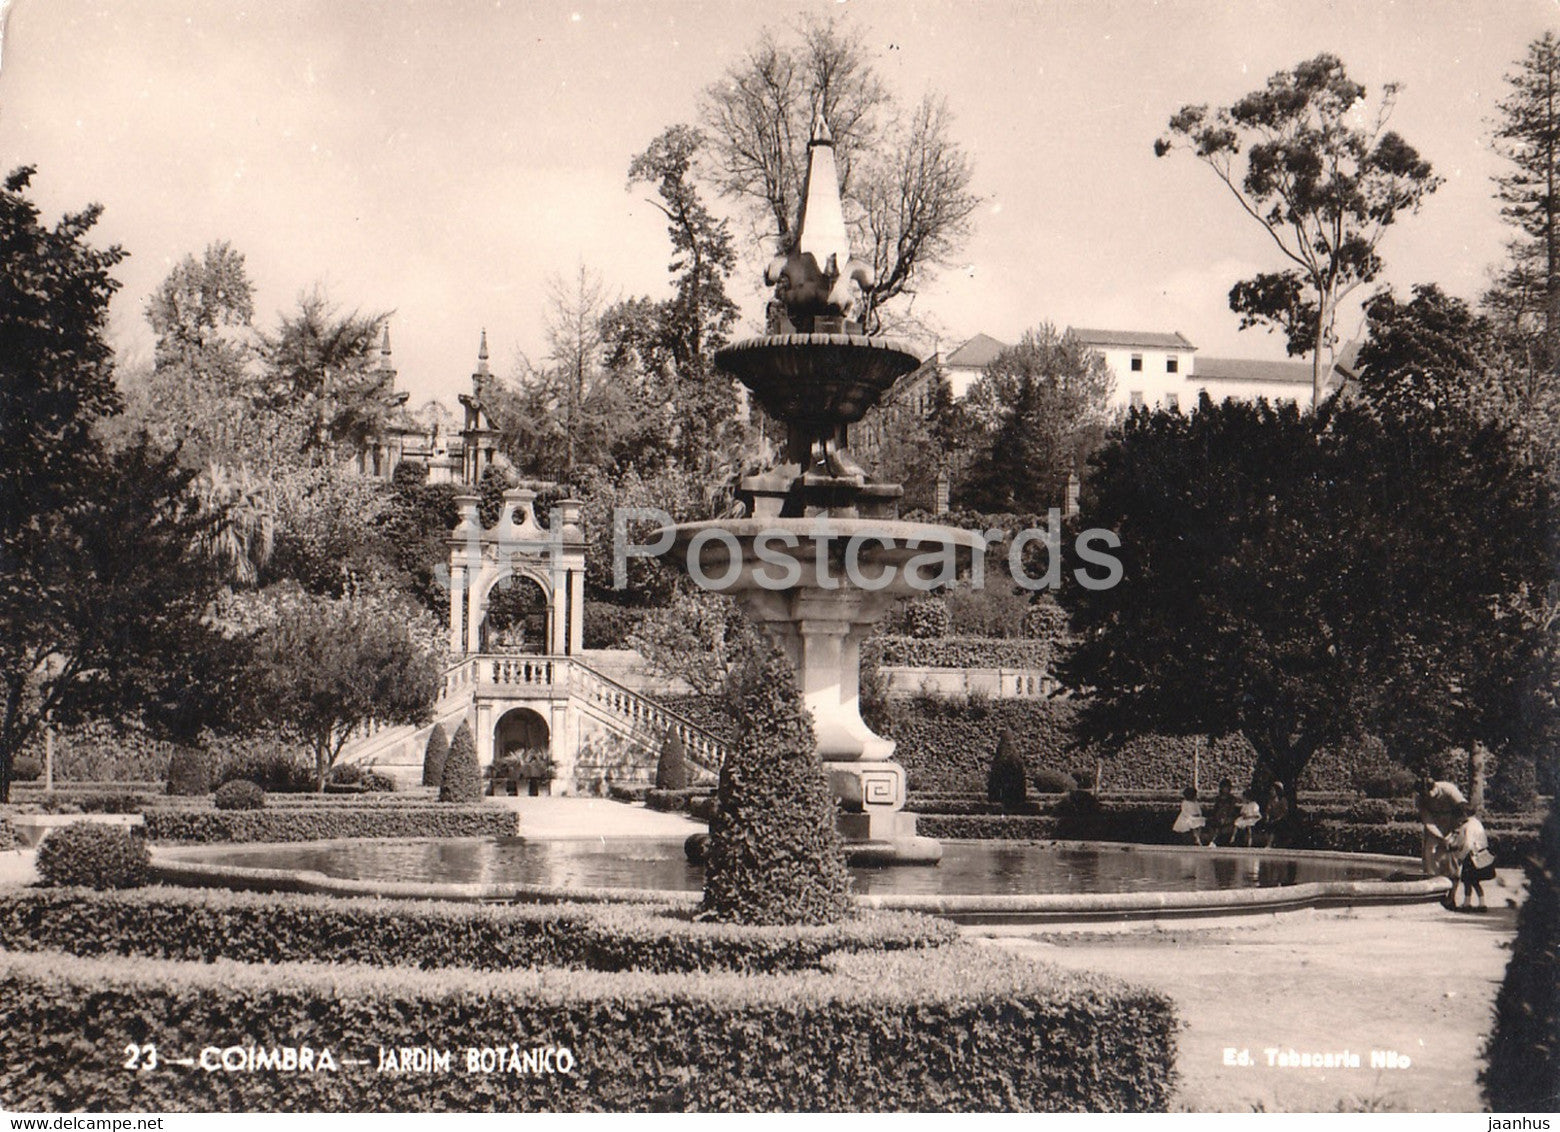 Coimbra - Jardim Botanico - botanical garden - 23 - 1964 - Portugal - used - JH Postcards